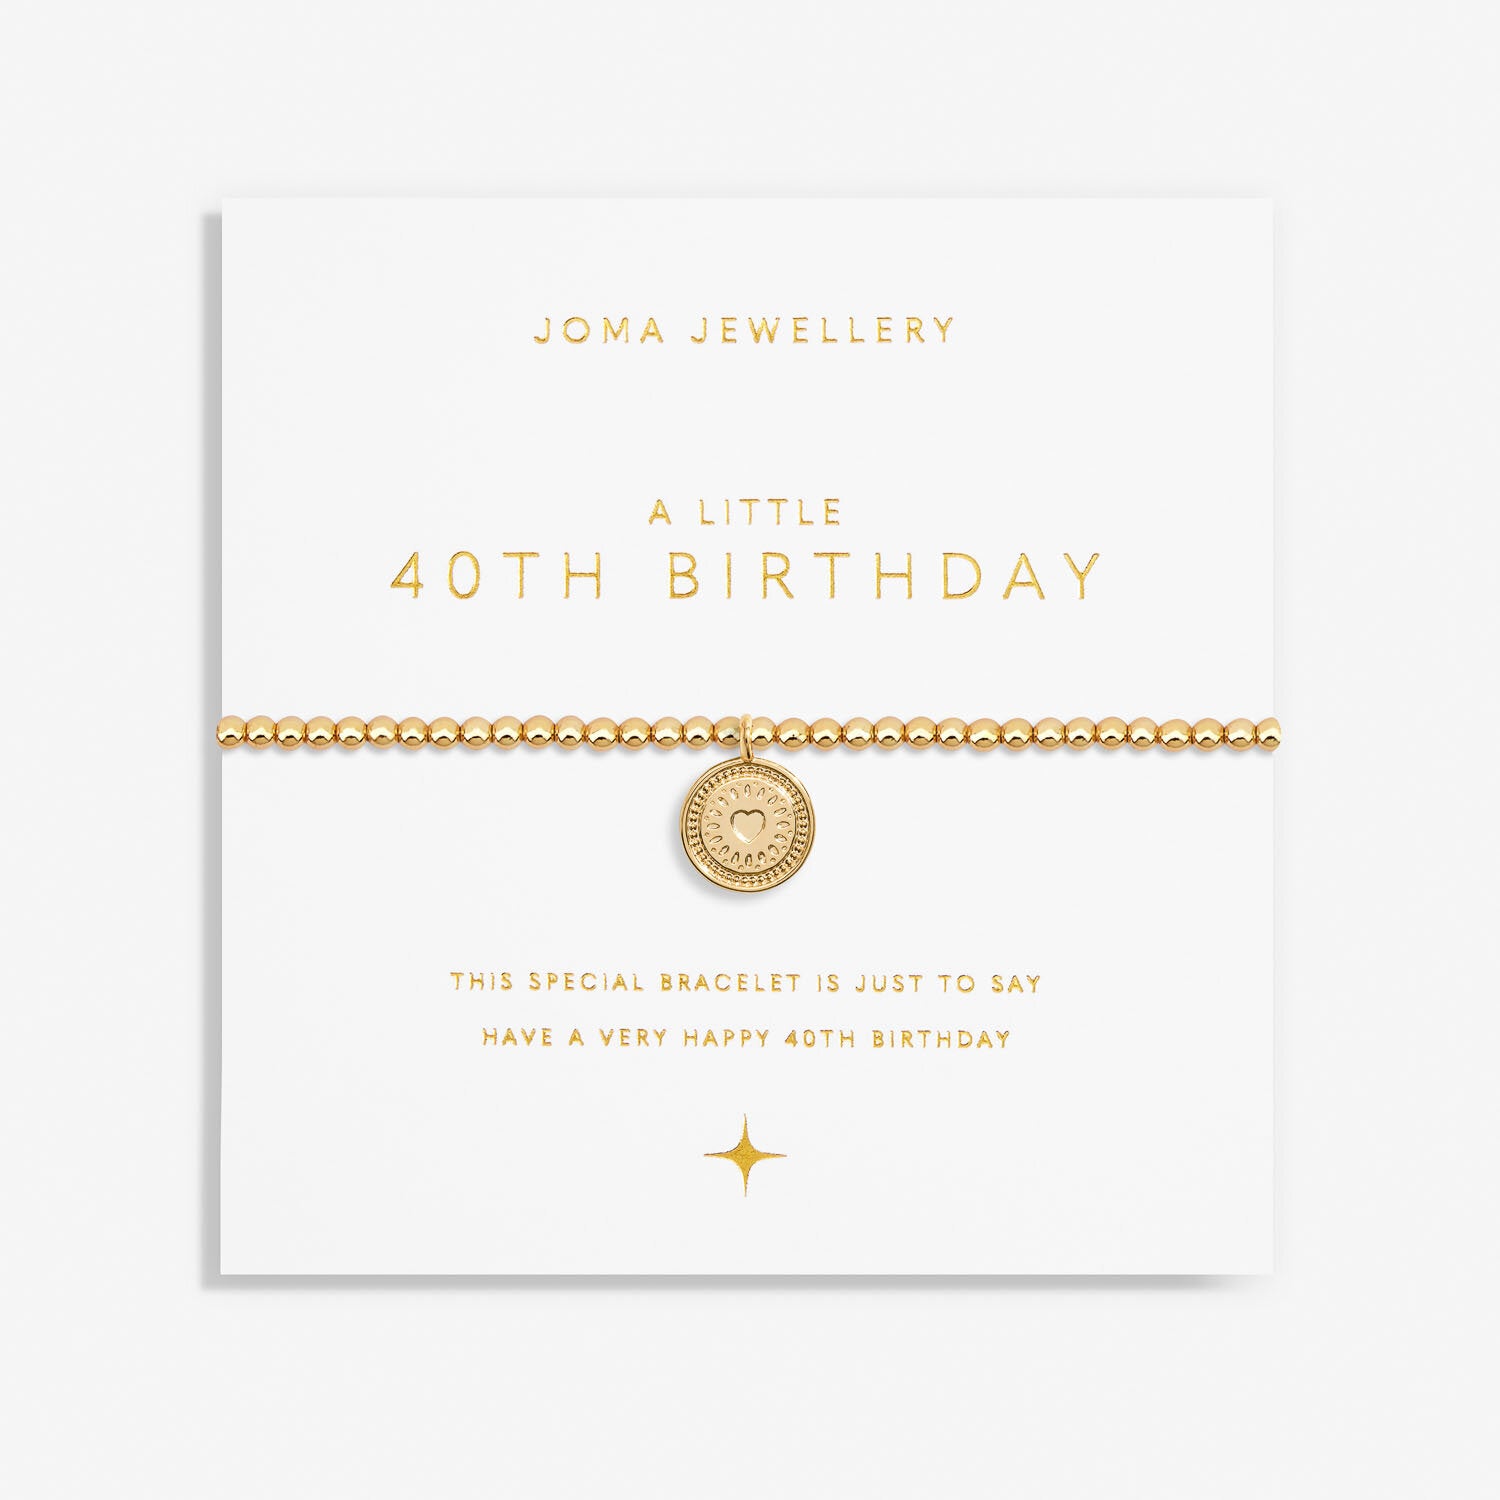 A Little '40th Birthday' Bracelet - Joma Jewellery